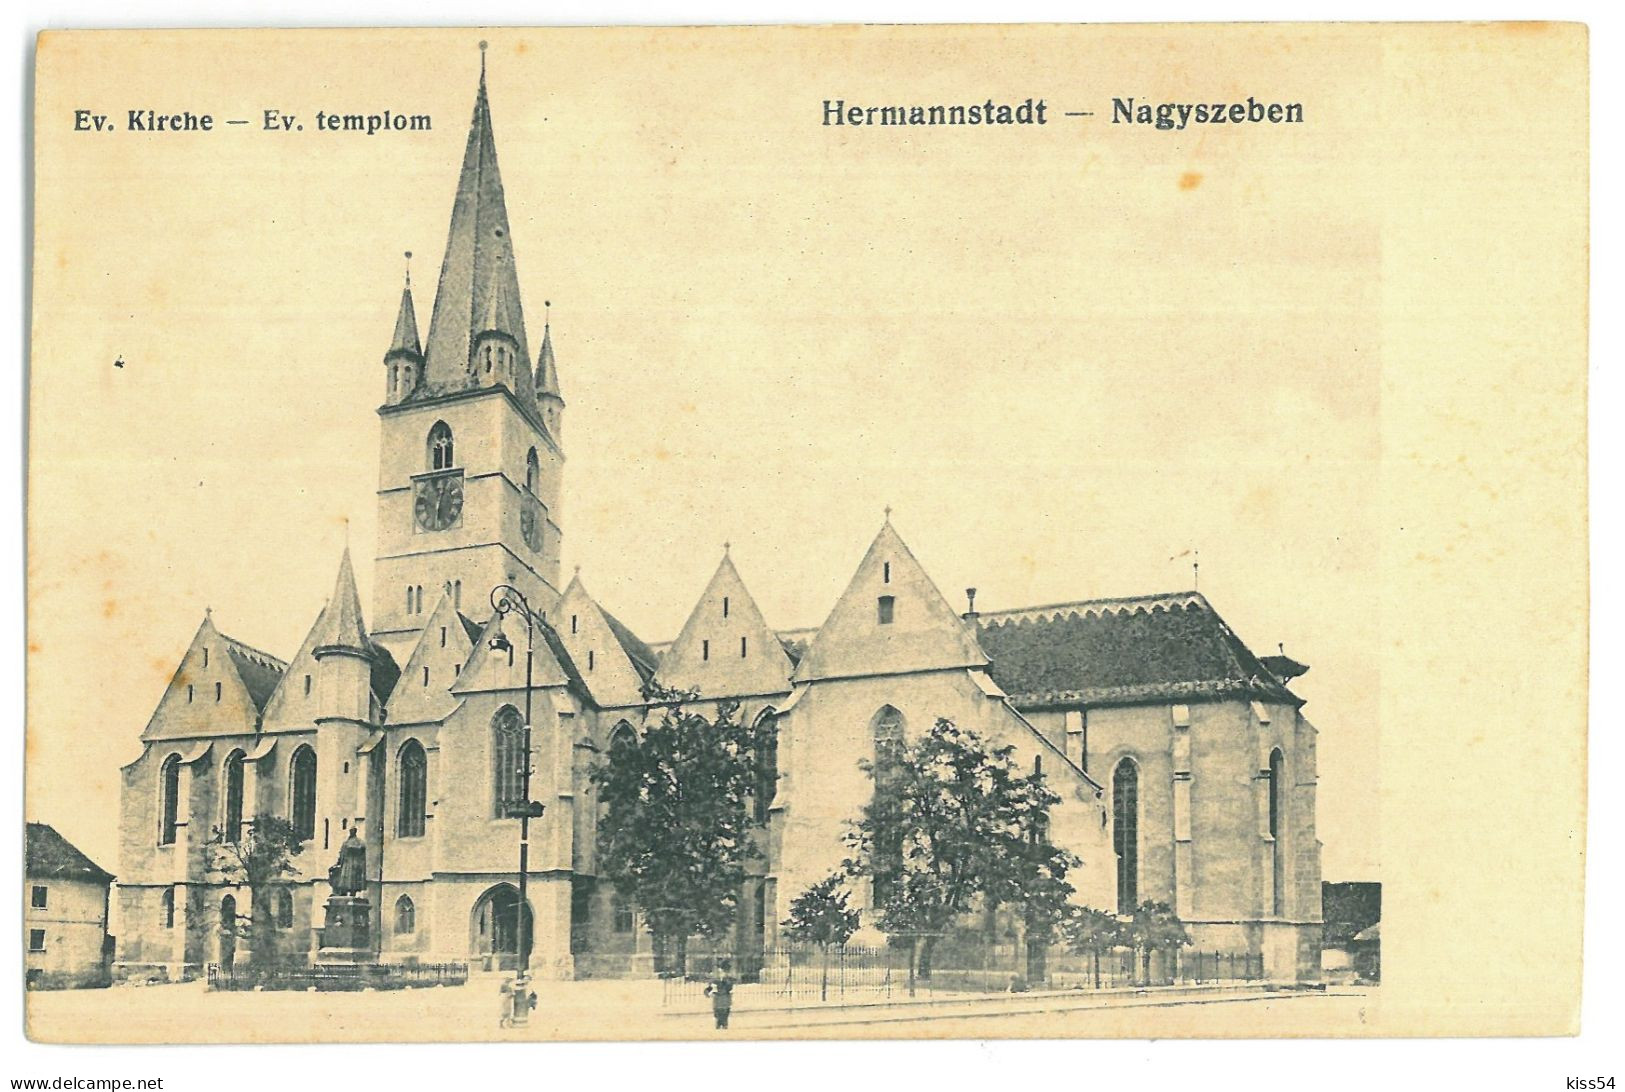 RO 86 - 23300 SIBIU, Evangelical Church, Romania - Old Postcard - Unused - 1917 - Romania